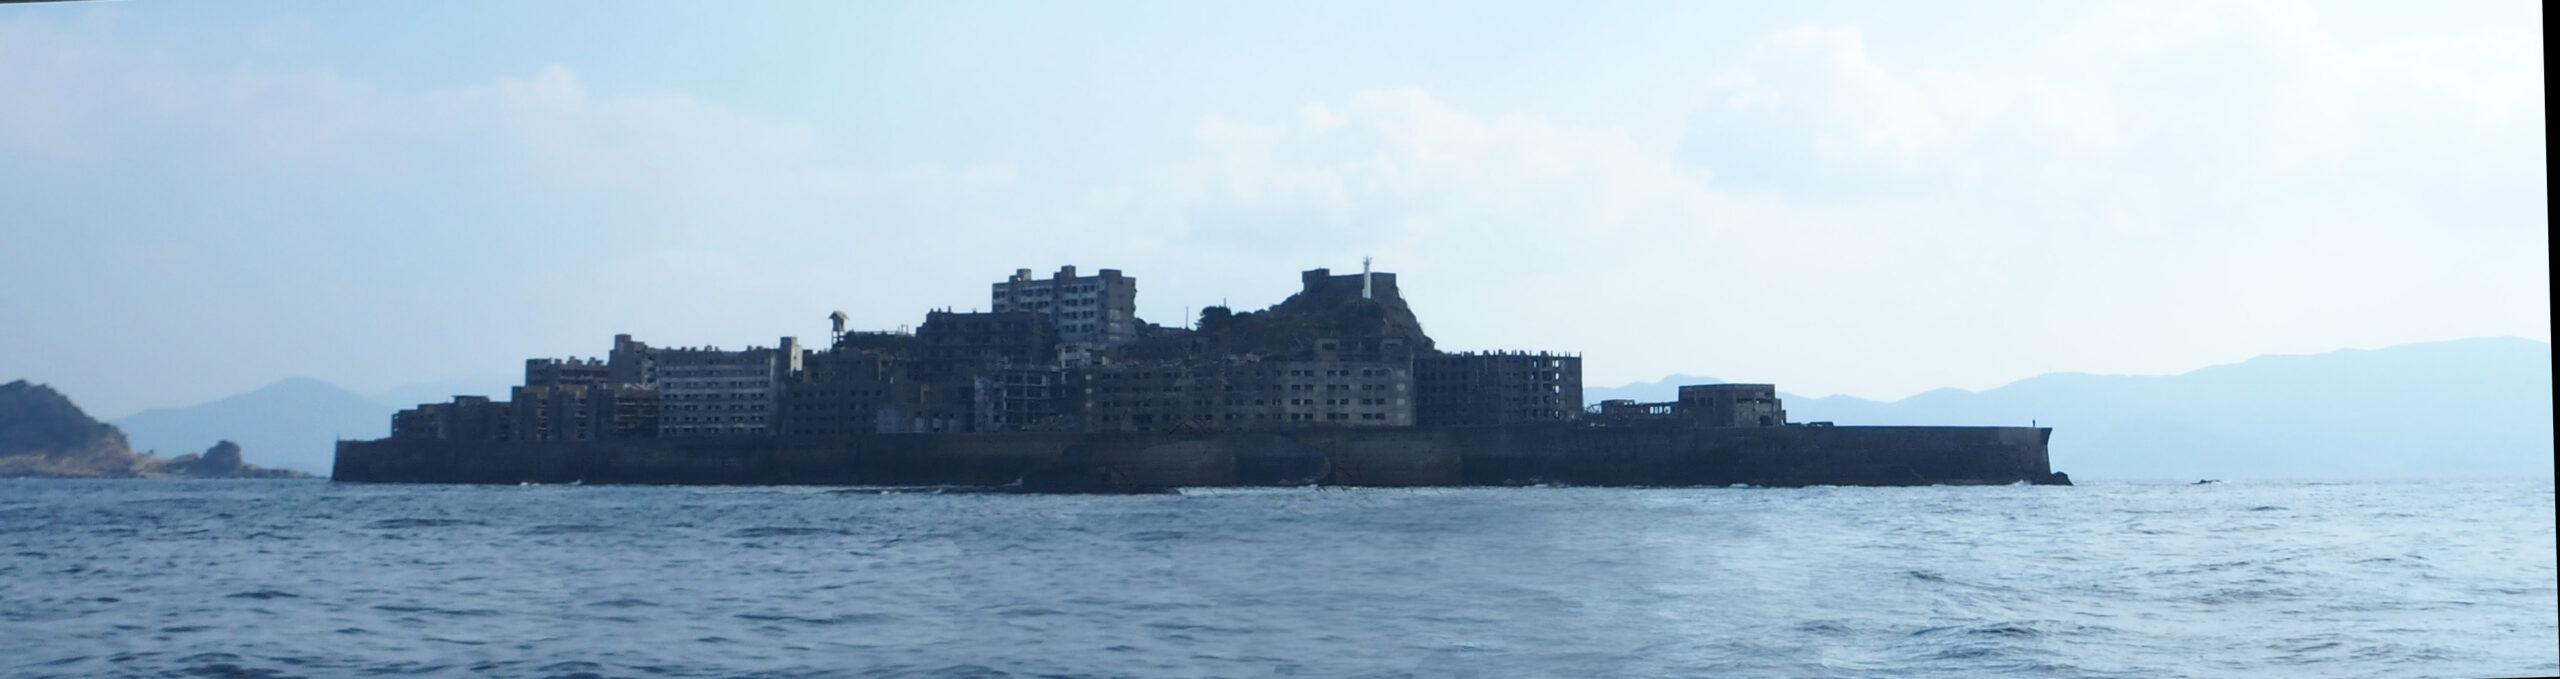 Battleship Island View